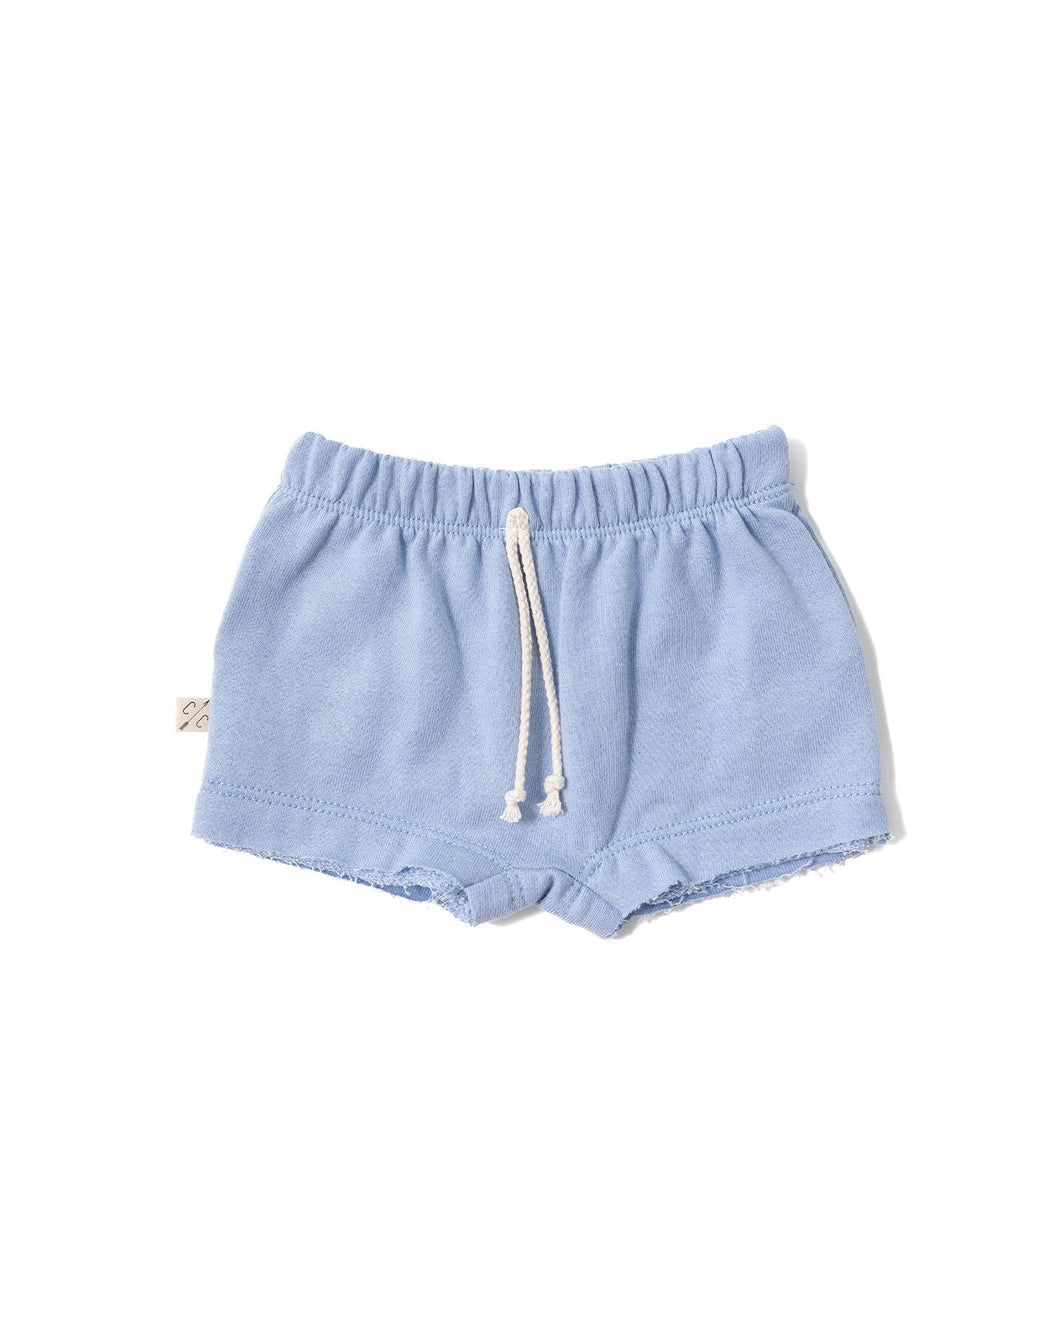 boy shorts - periwinkle